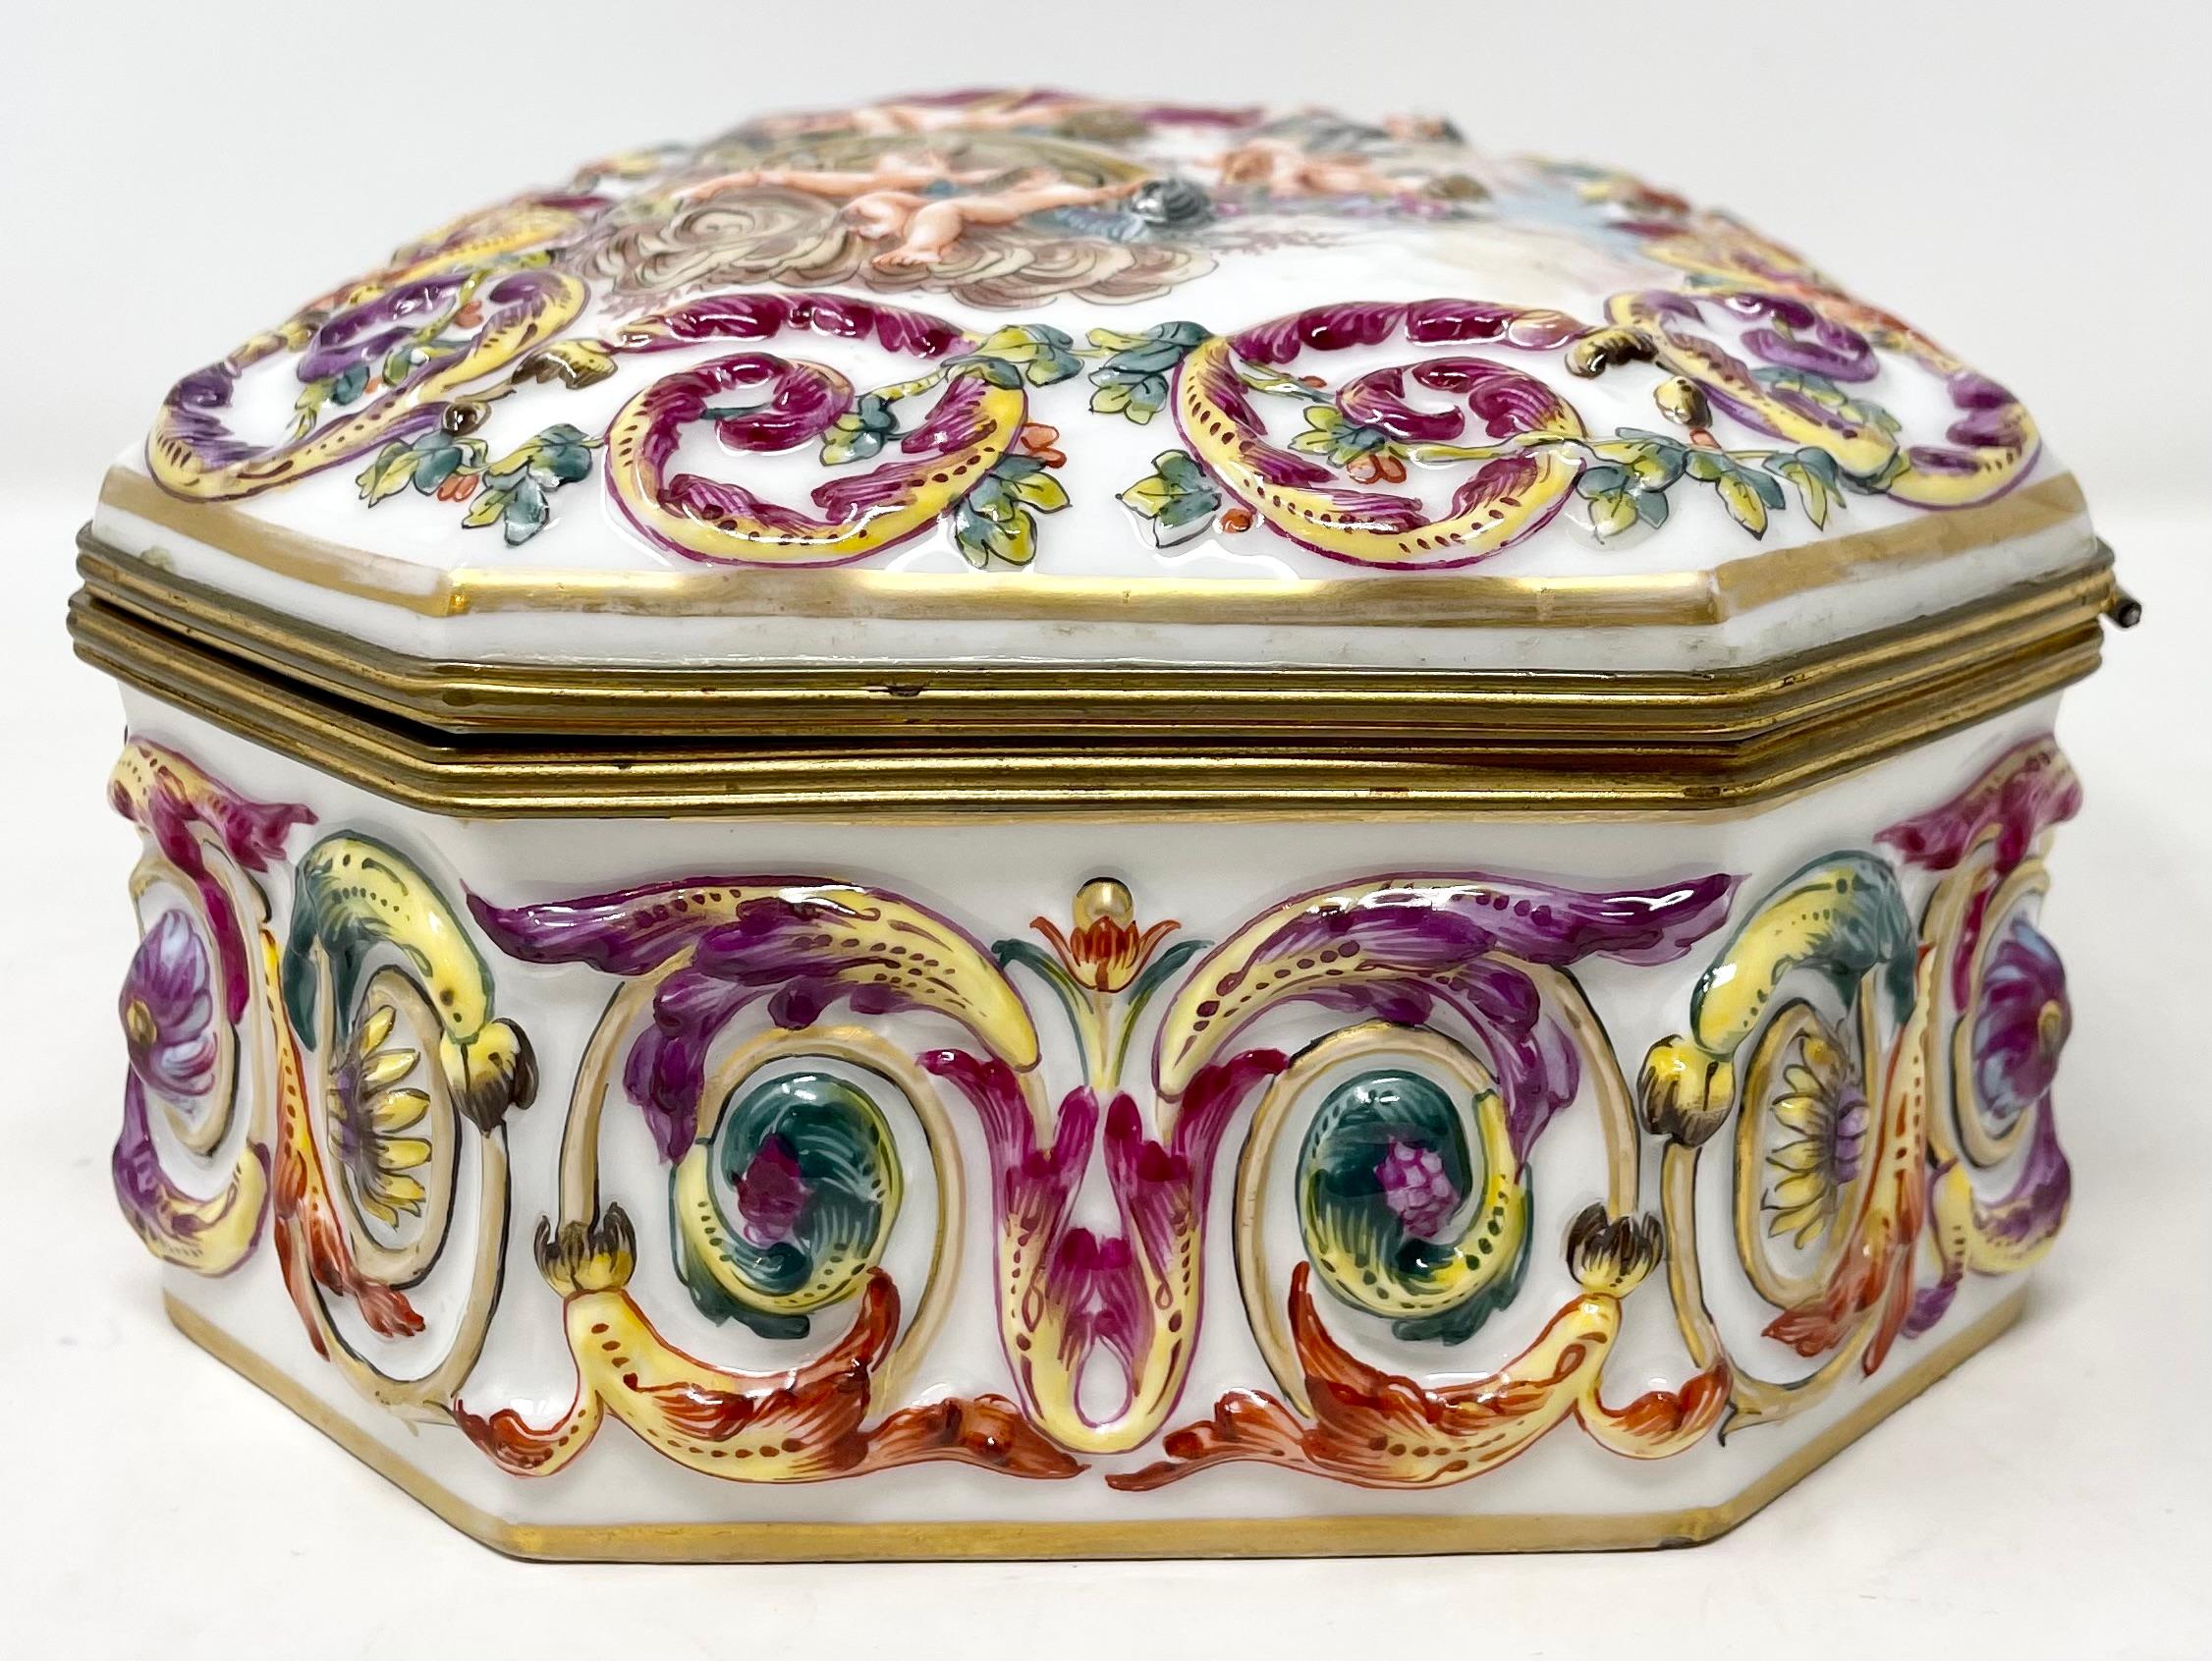 20th Century Antique Italian Capo di Monte Porcelain Hand-Painted Jewel Box, Circa 1900's For Sale